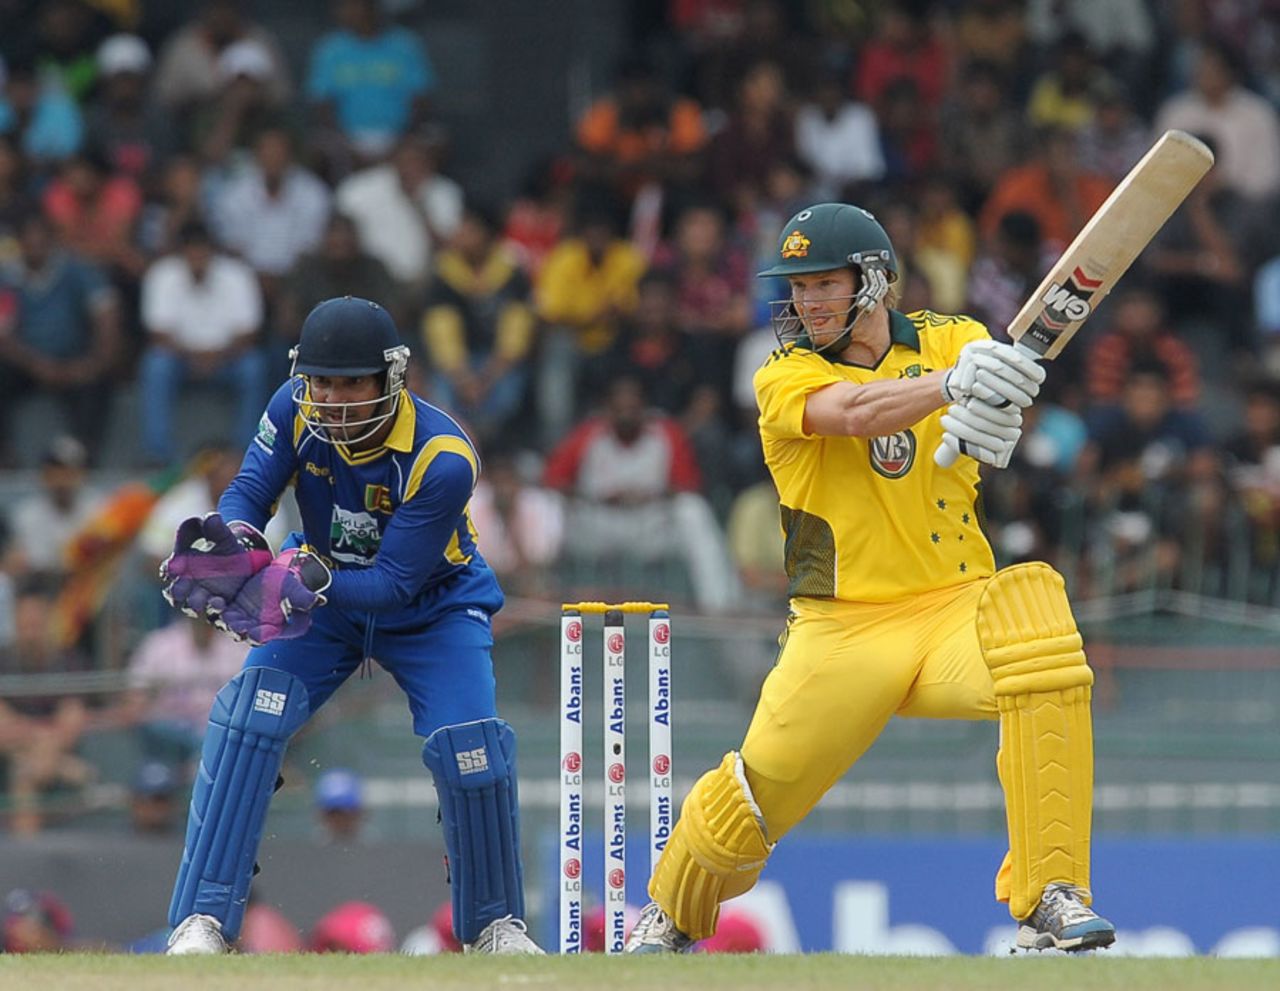 Shane Watson powers one through the off side, Sri Lanka v Australia, 5th ODI, Colombo, August 22, 2011